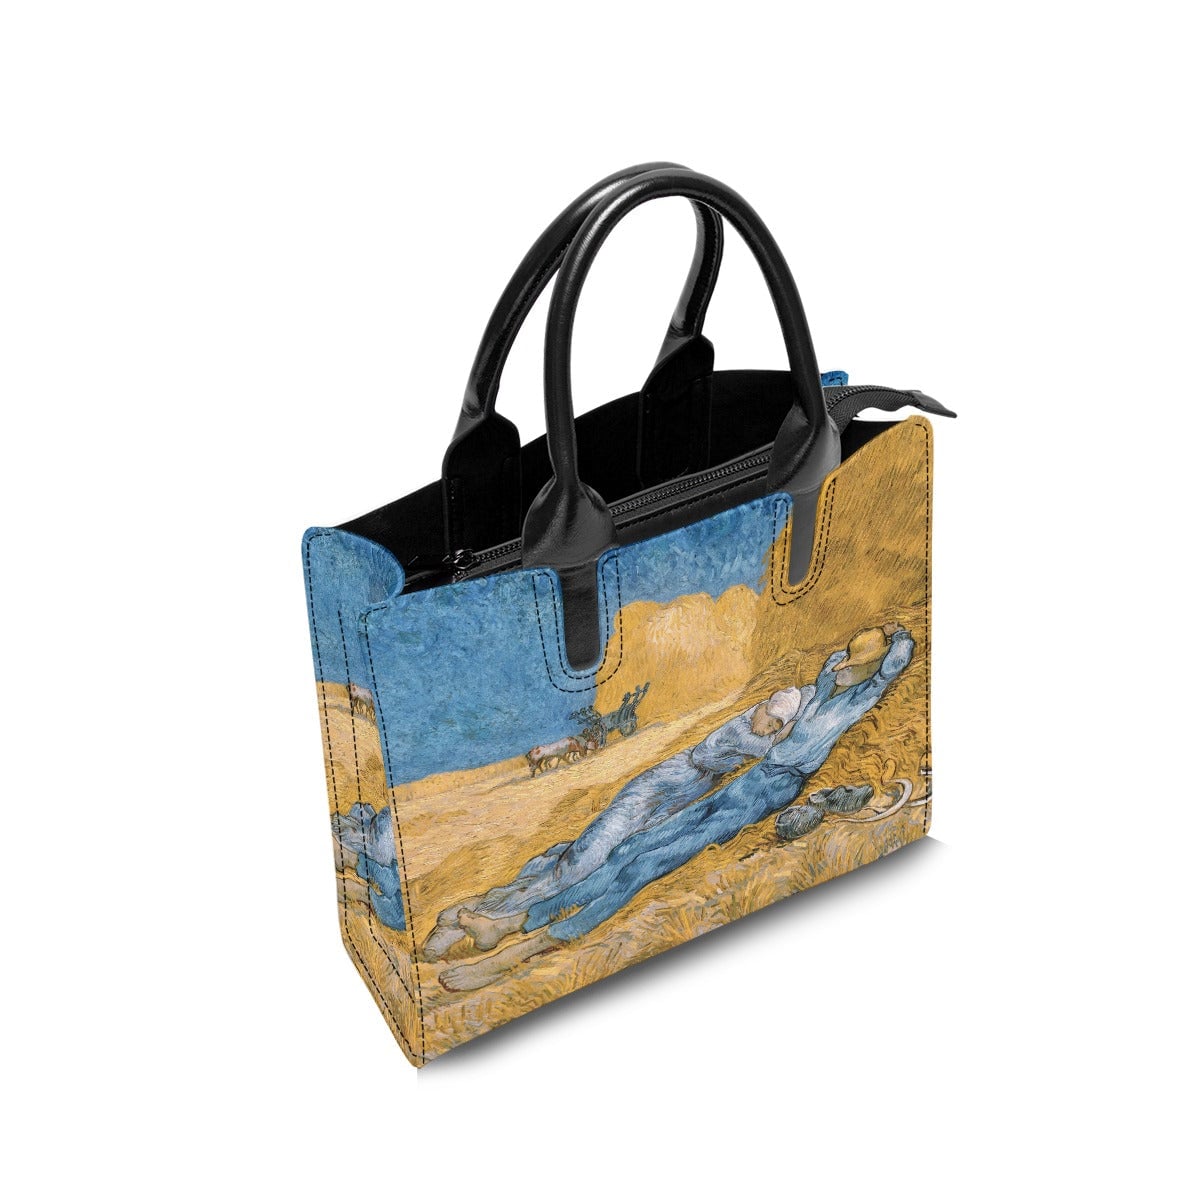 The Siesta by Vincent Van Gogh Art Handbag